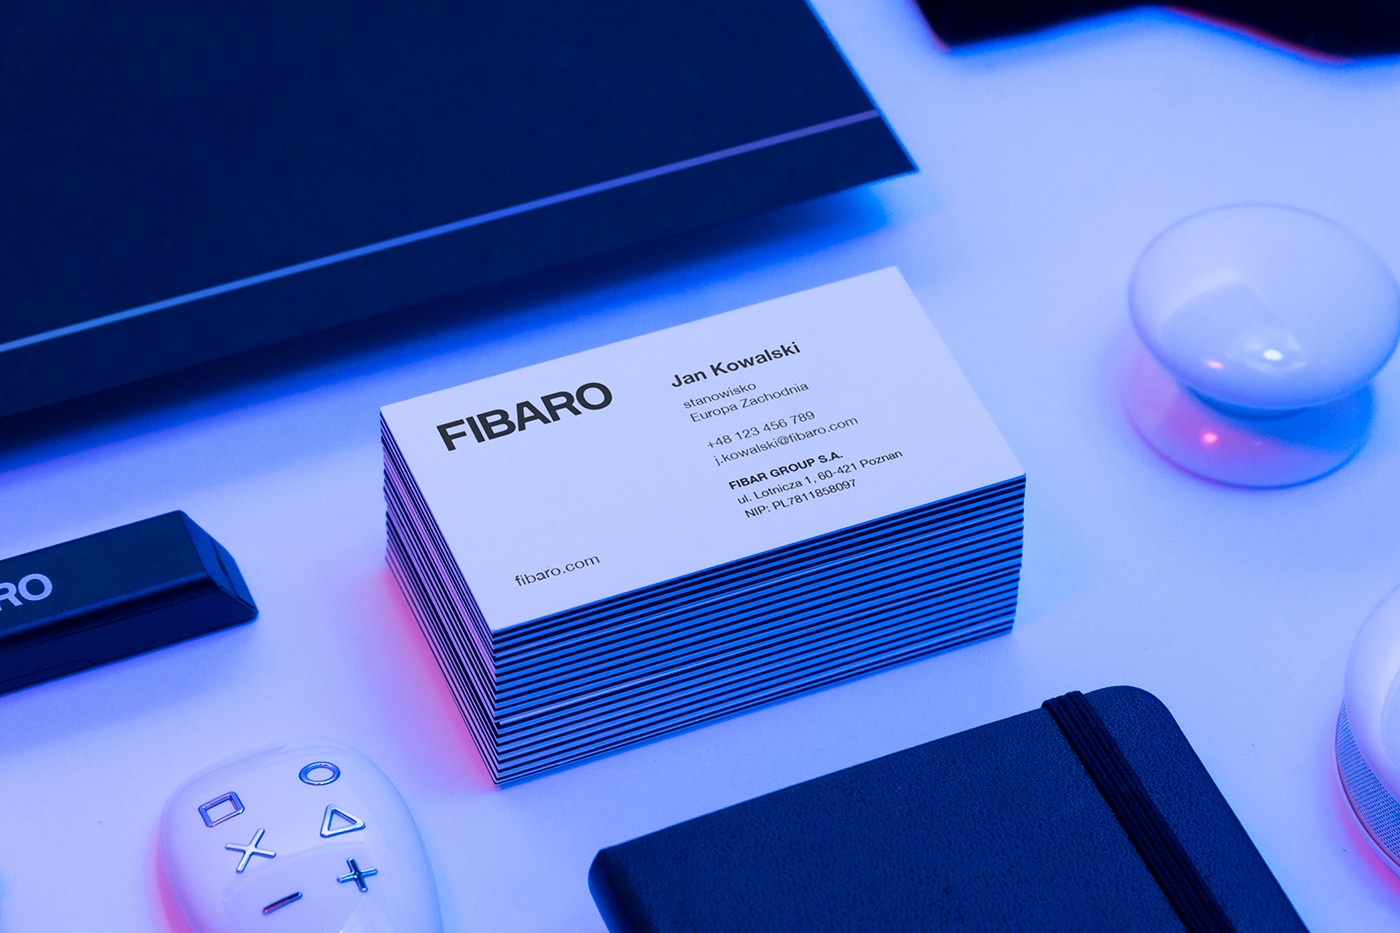 fibaro Smart Home print design  Layout Brand Design kommunikat rebranding visual identity identyfikacja wizualna brand design system